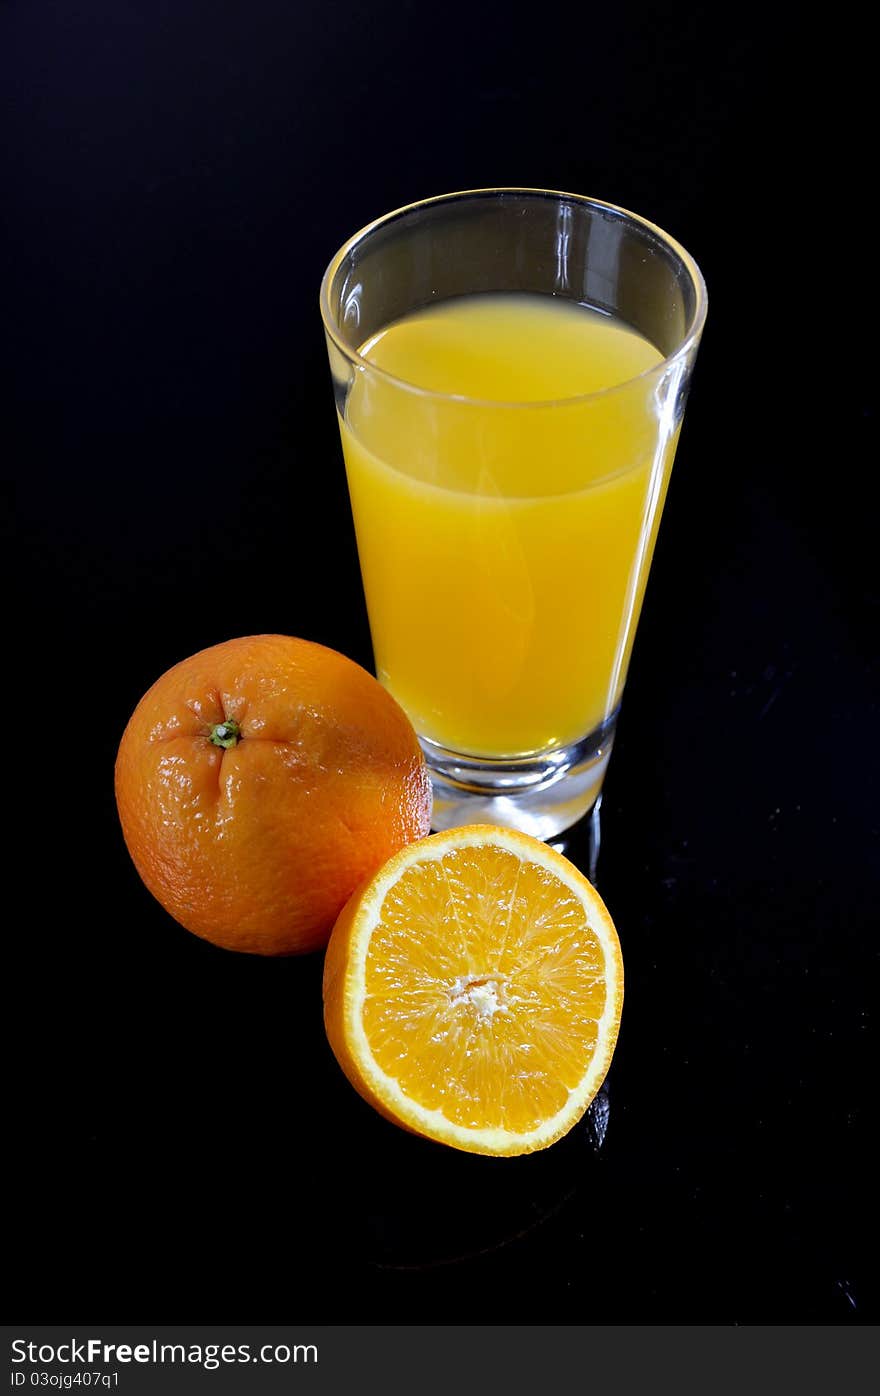 Orange juice glass and sliced orange on a black background